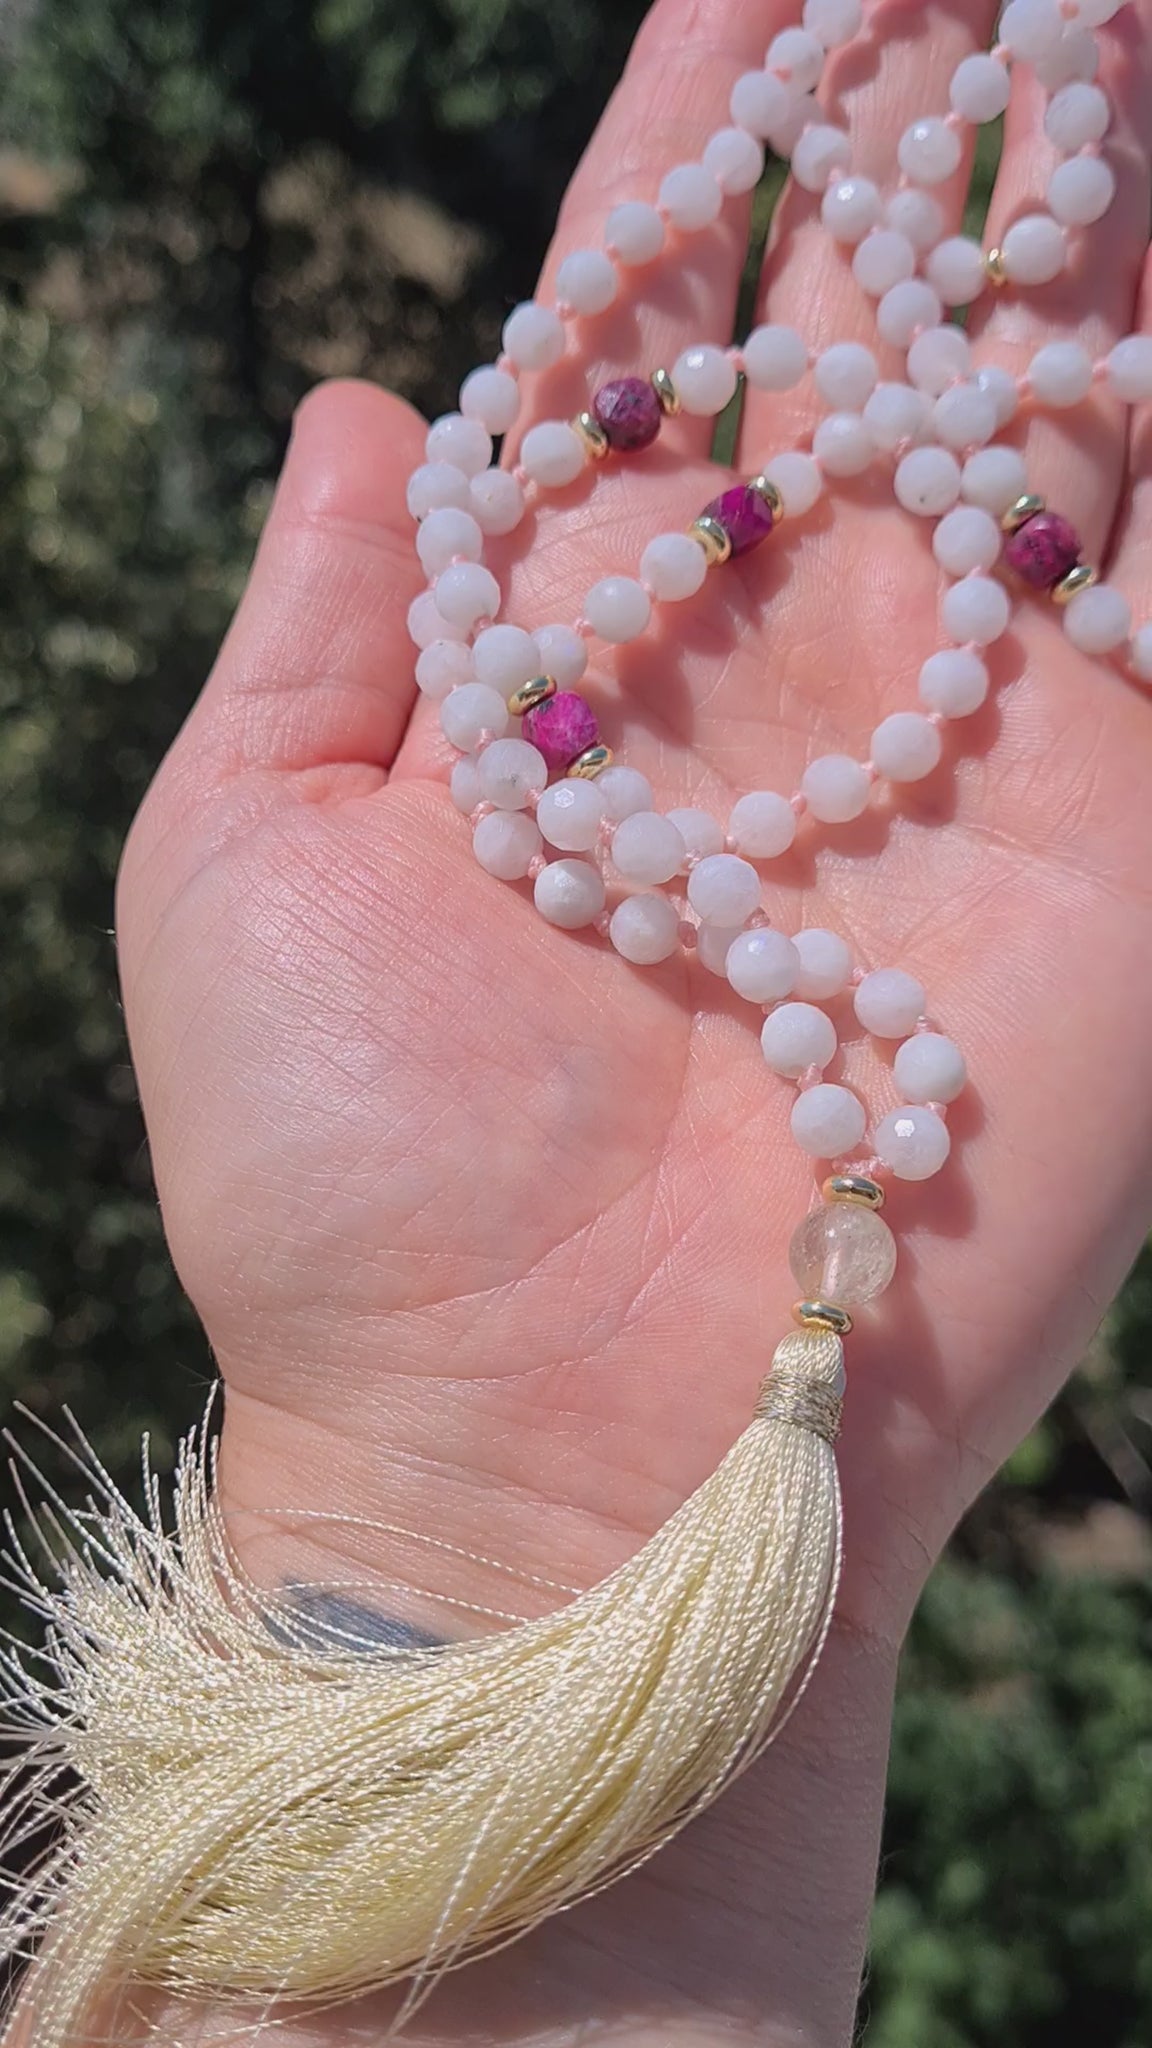 Rose Quartz Prayer Beads Mala, 108 Count